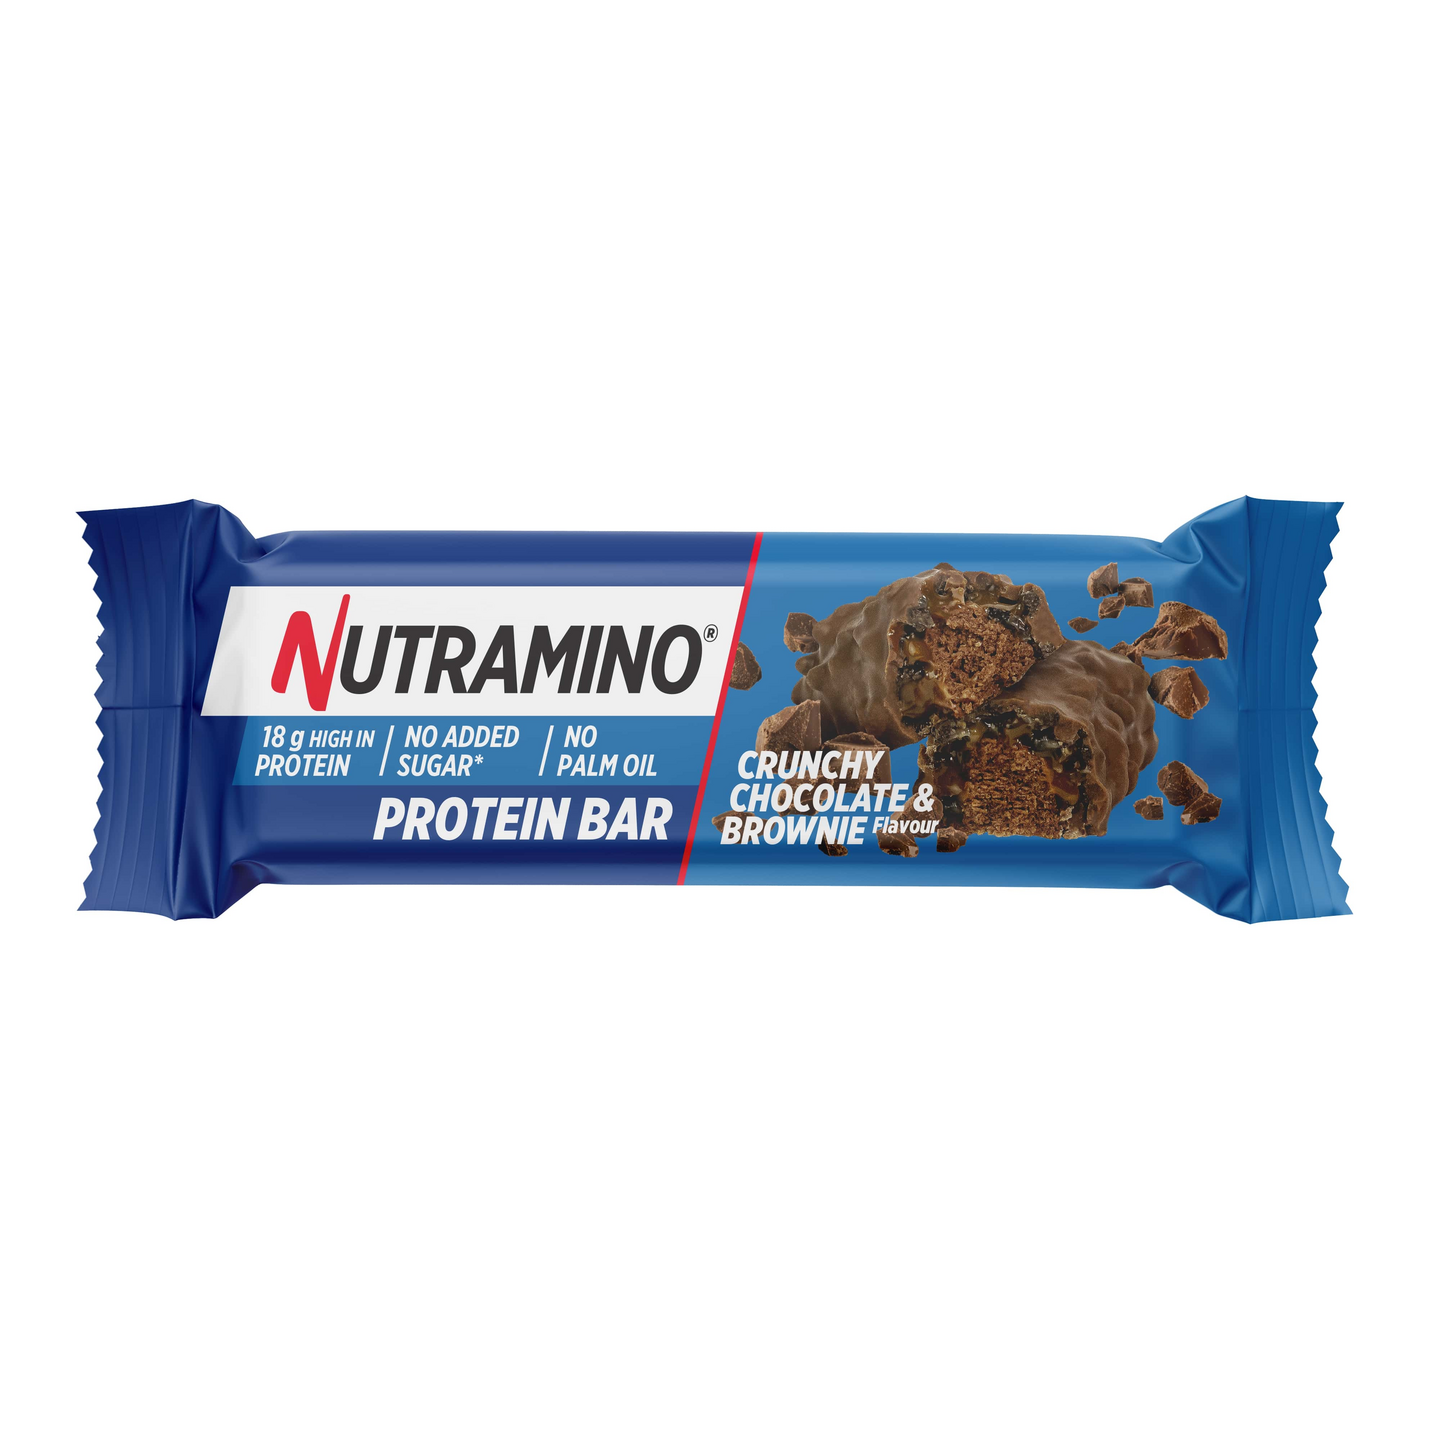 Nutramino proteiinipatukka Crunchy Chocolate & Brownie 55g